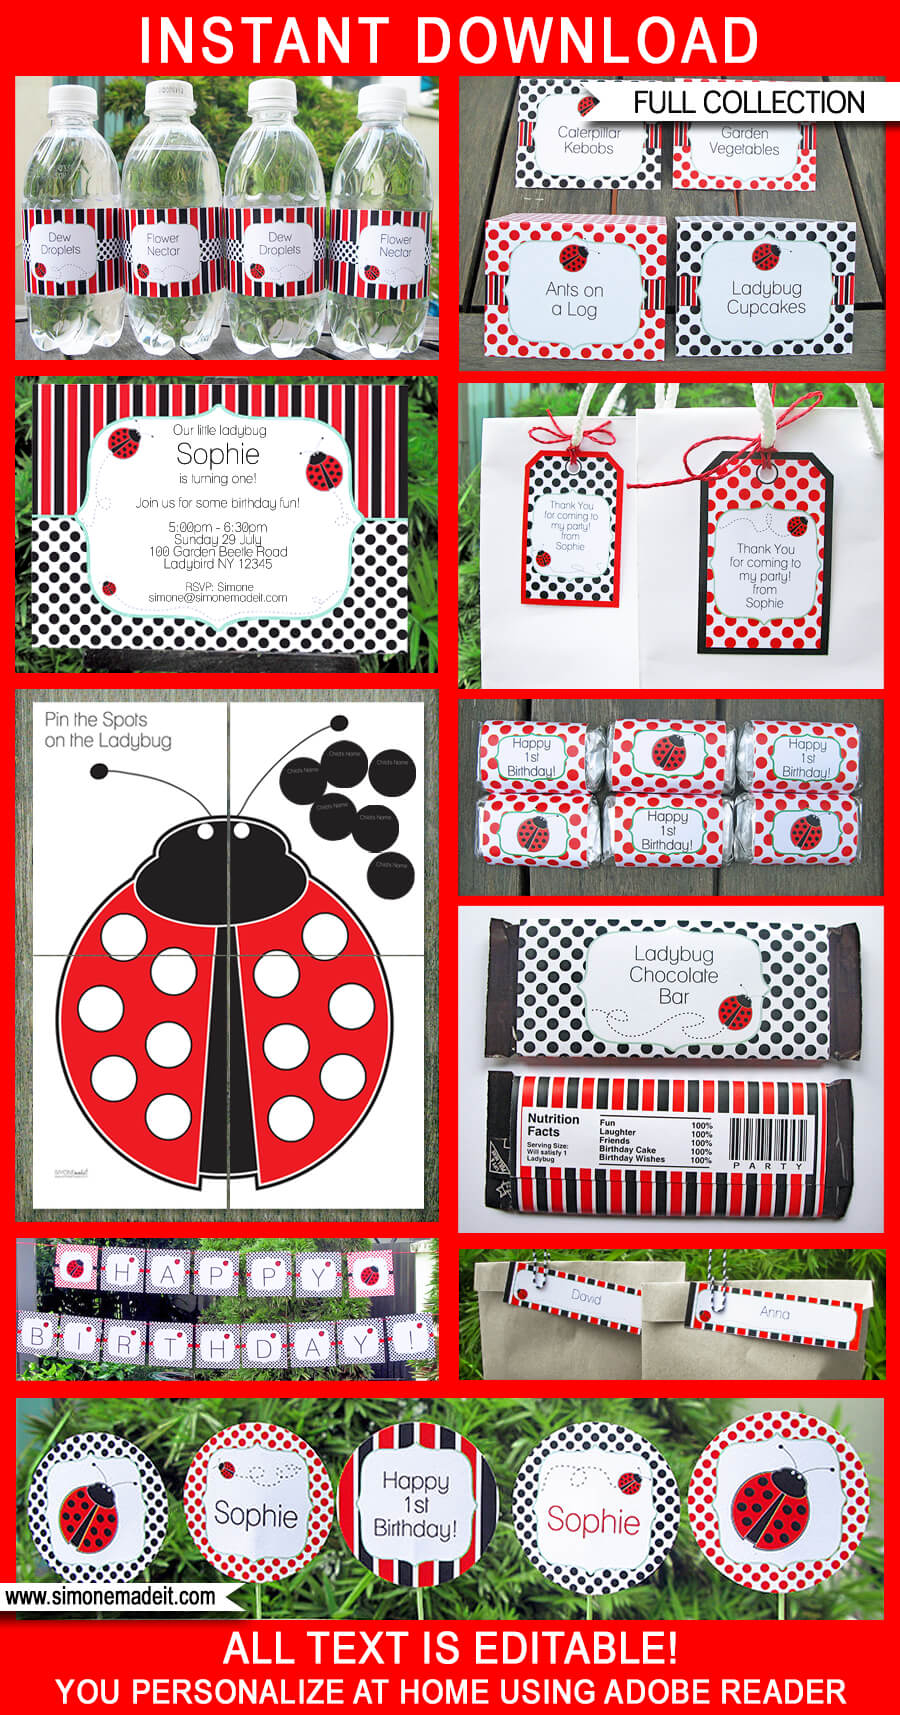 Ladybug Party Printables, Invitations & Decorations | Ladybird Party | Editable Birthday Party Theme Templates | INSTANT DOWNLOAD $12.50 via SIMONEmadeit.com